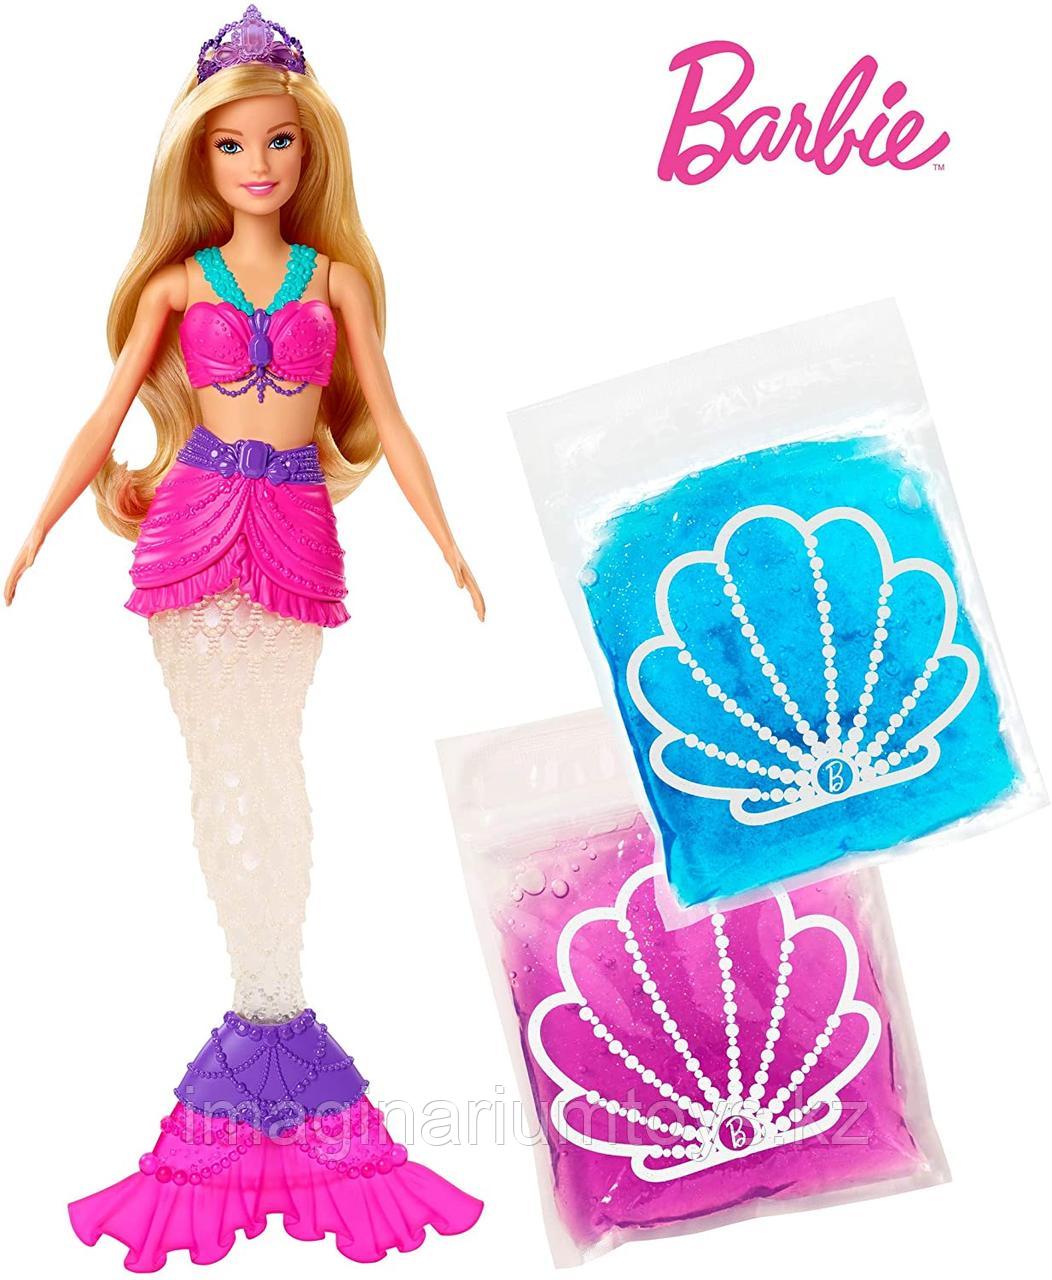 Кукла Barbie Барби Русалка со слаймом, фото 1